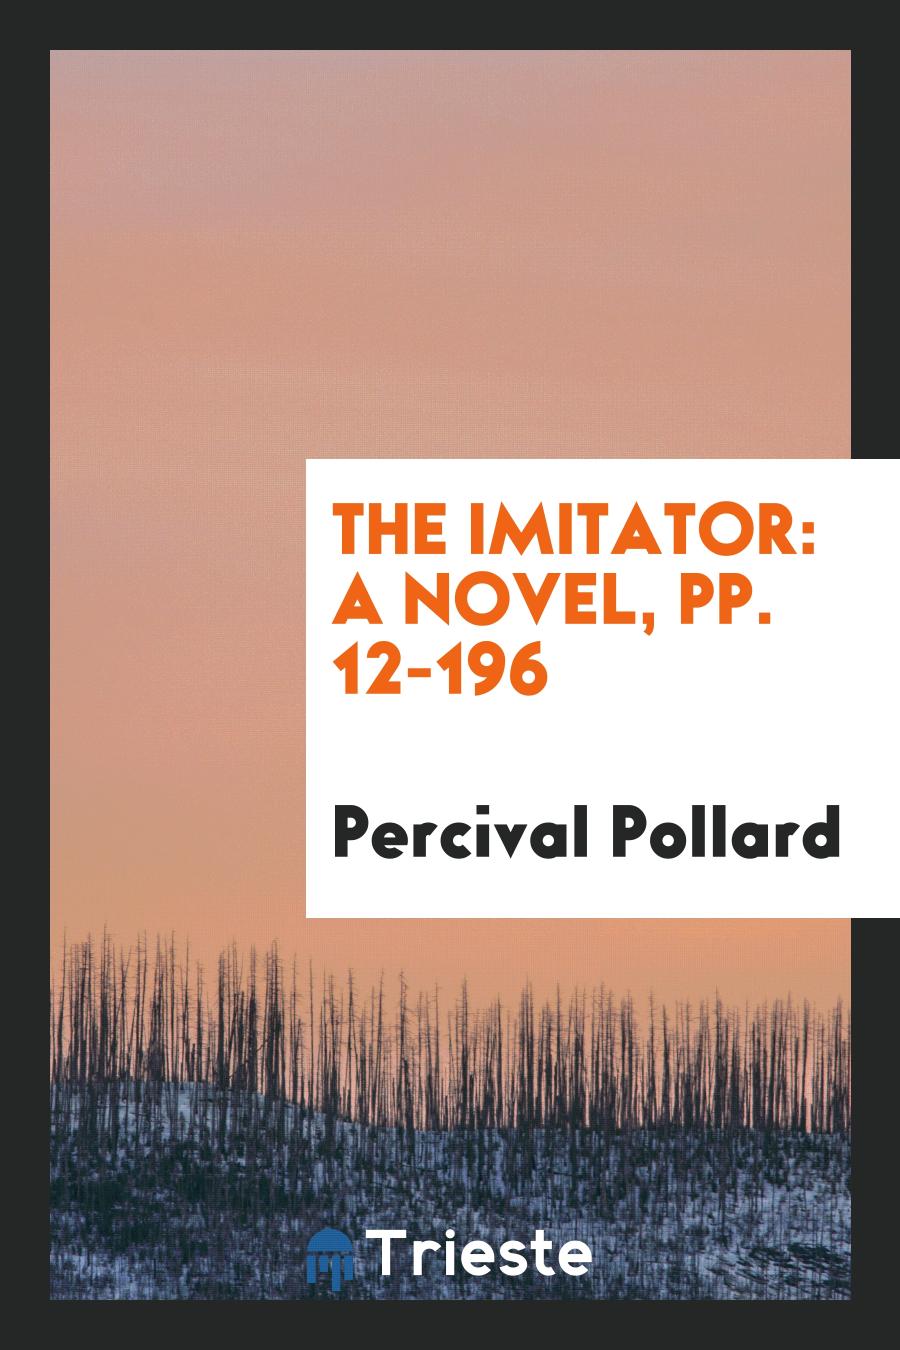 The Imitator: A Novel, pp. 12-196